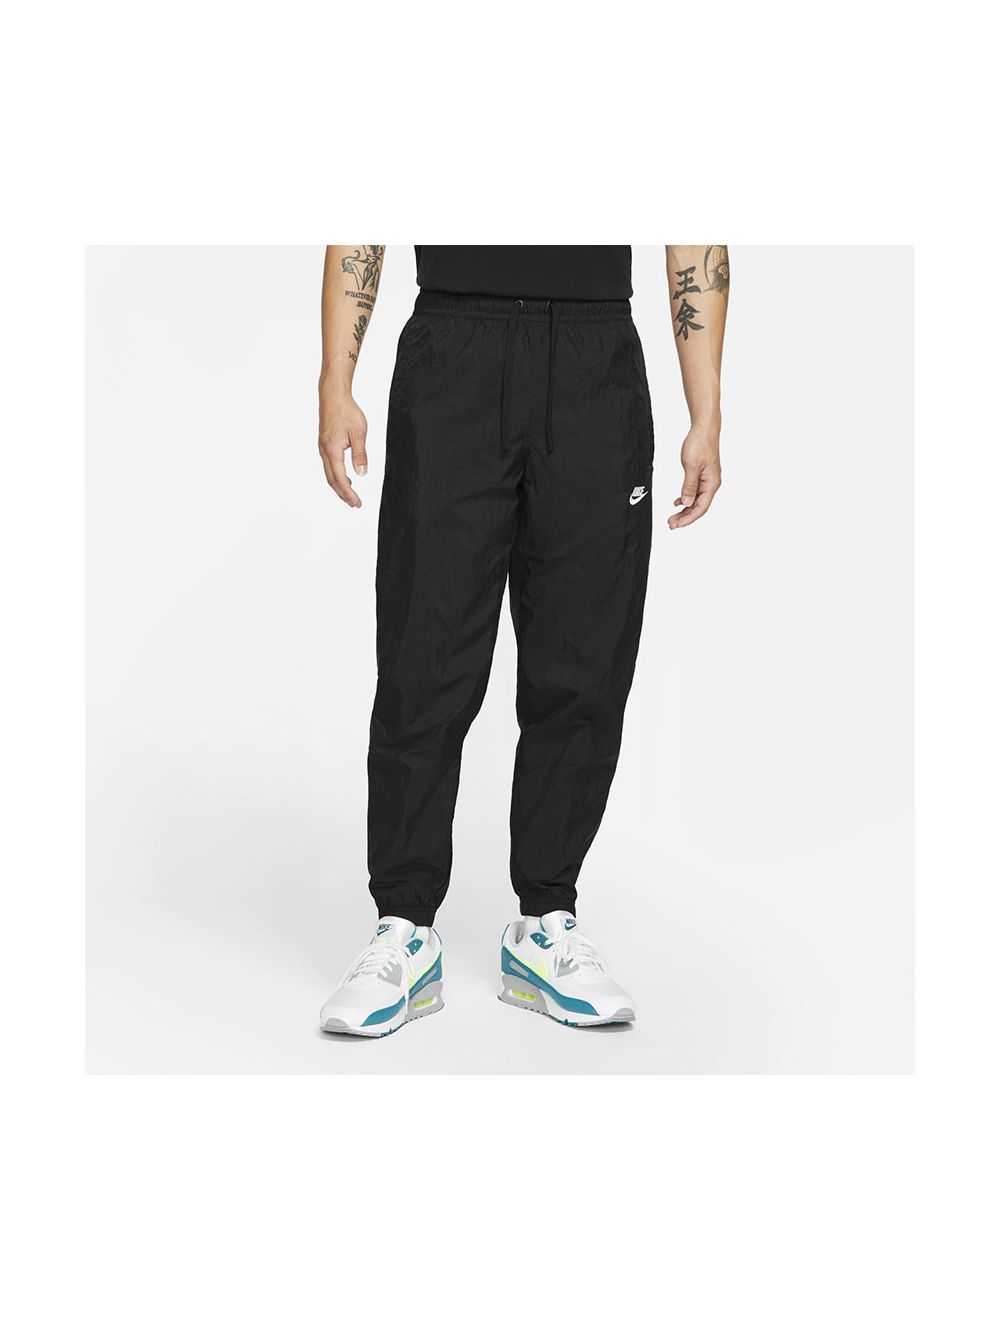 Buy Nike Woven LND Track Pants Mens Black | Studio 88